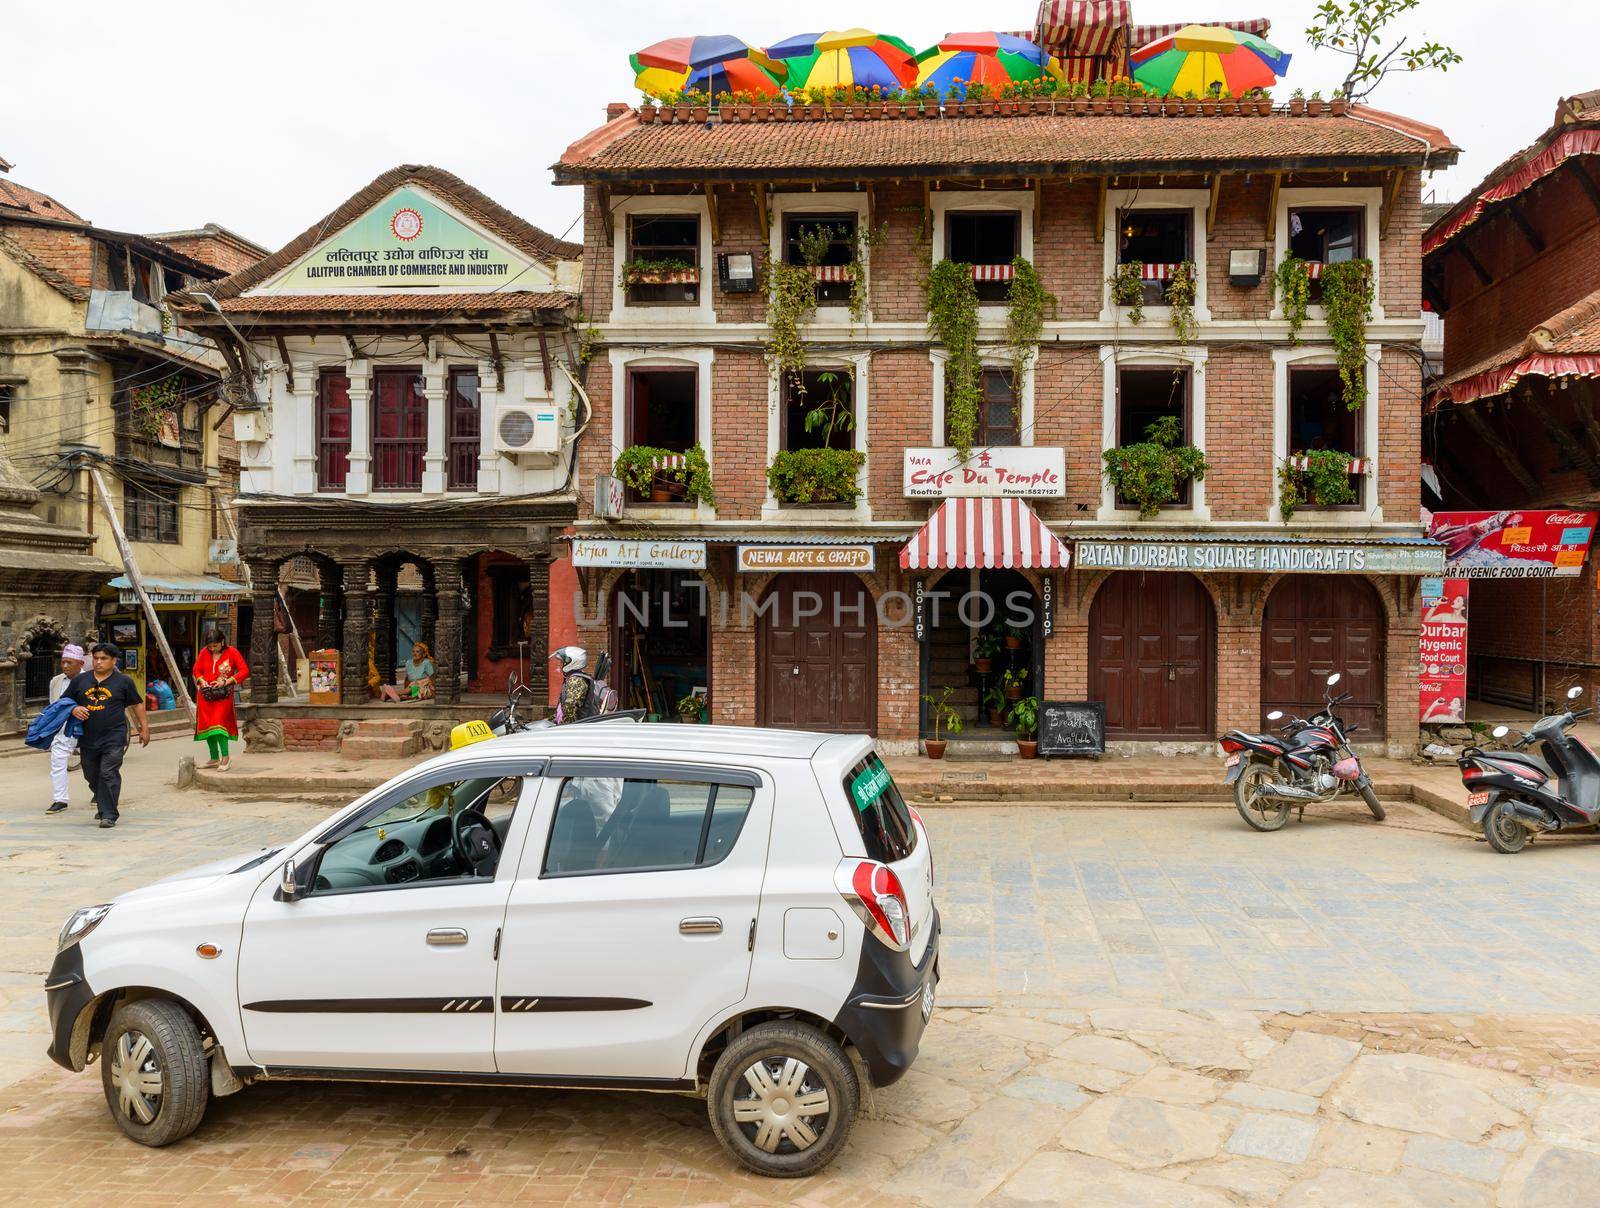 PATAN, NEPAL - CIRCA JUNE 2016: A Suzuki Maruti taxi and the Cafe du Temple on Patan Durbar Square.